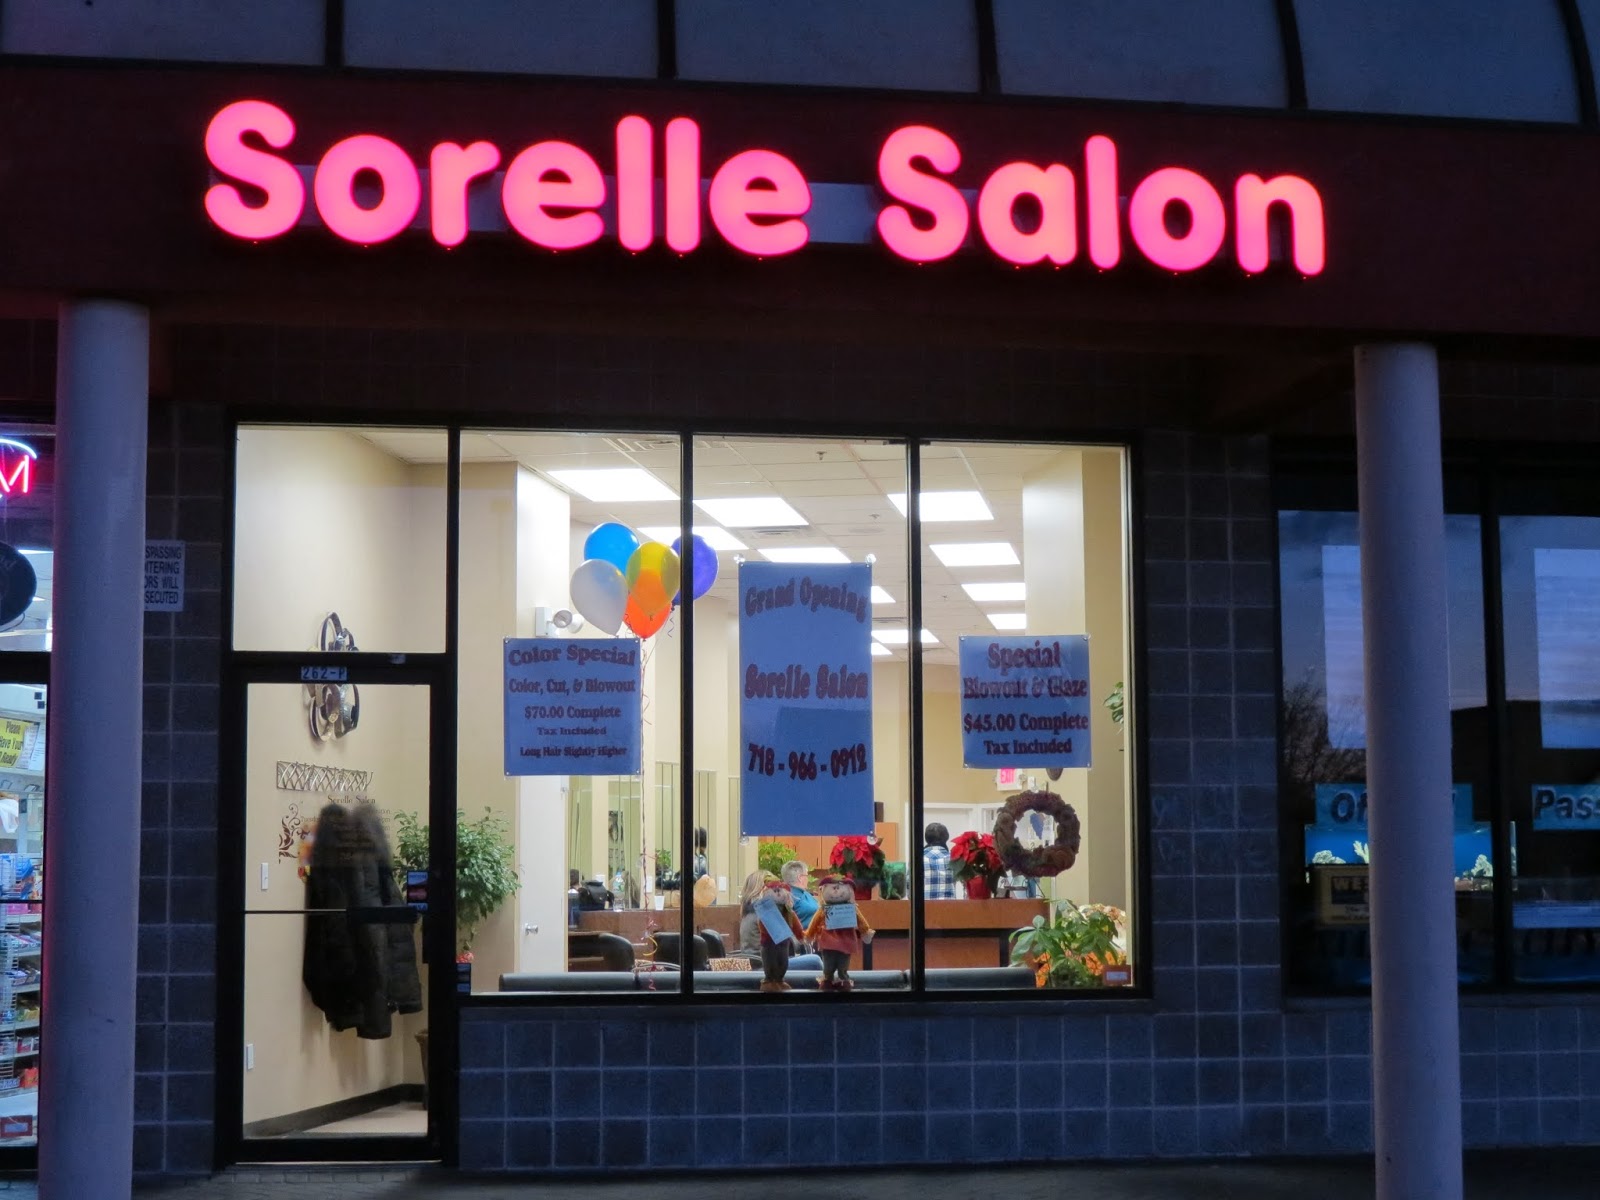 Photo of Sorelle Salon - Hair Salon in Staten Island City, New York, United States - 2 Picture of Point of interest, Establishment, Beauty salon, Hair care